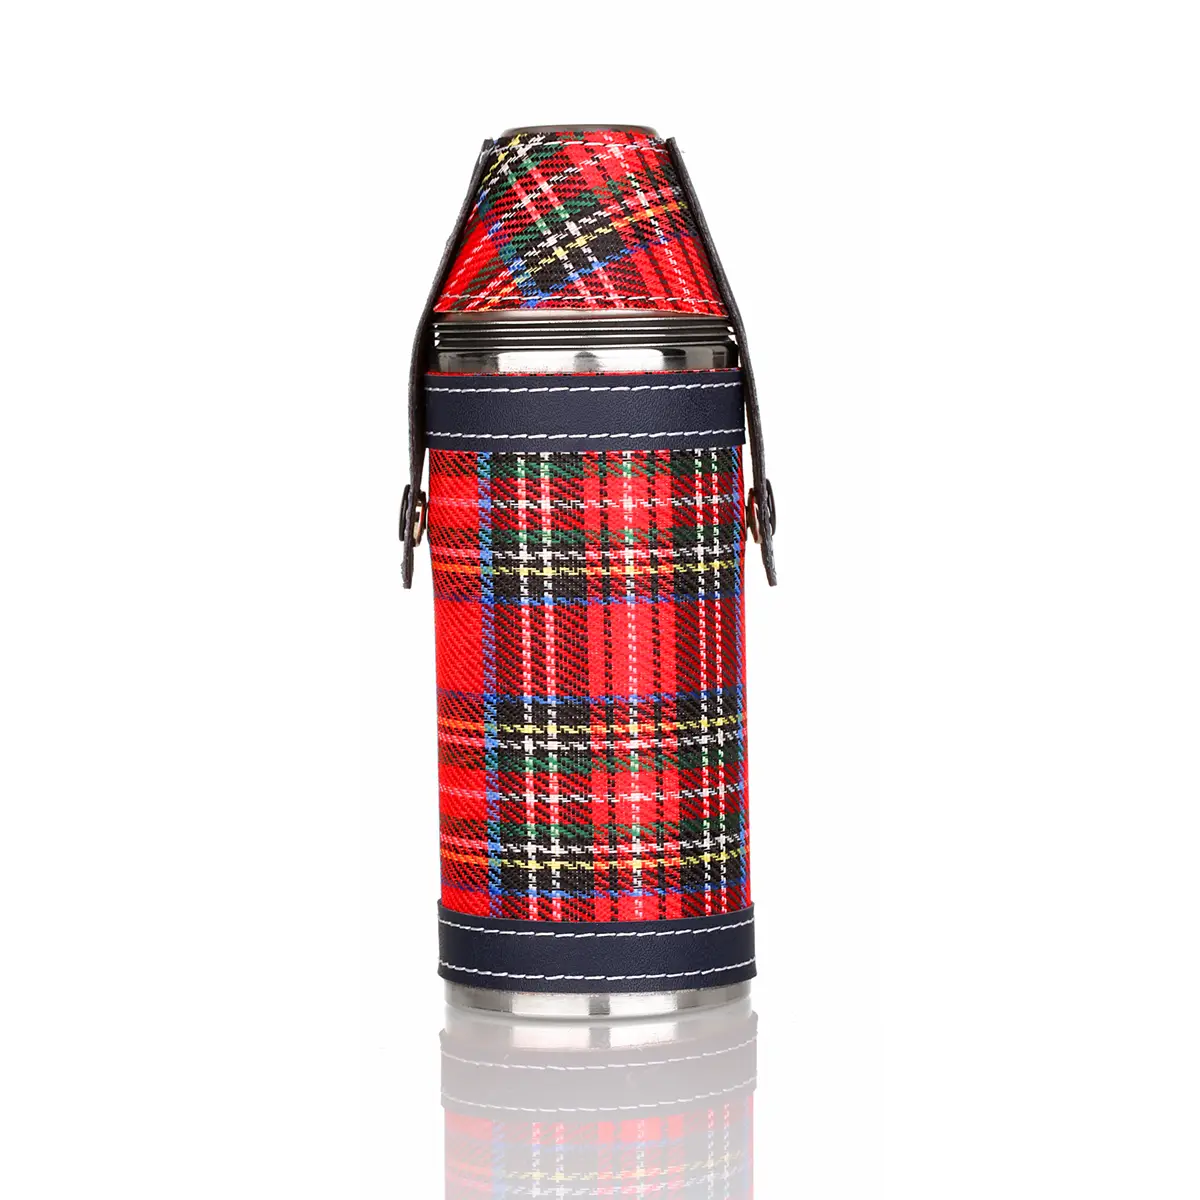 Royal Stewart Tartan Hunting Flask / Campingflasche aus Schottland